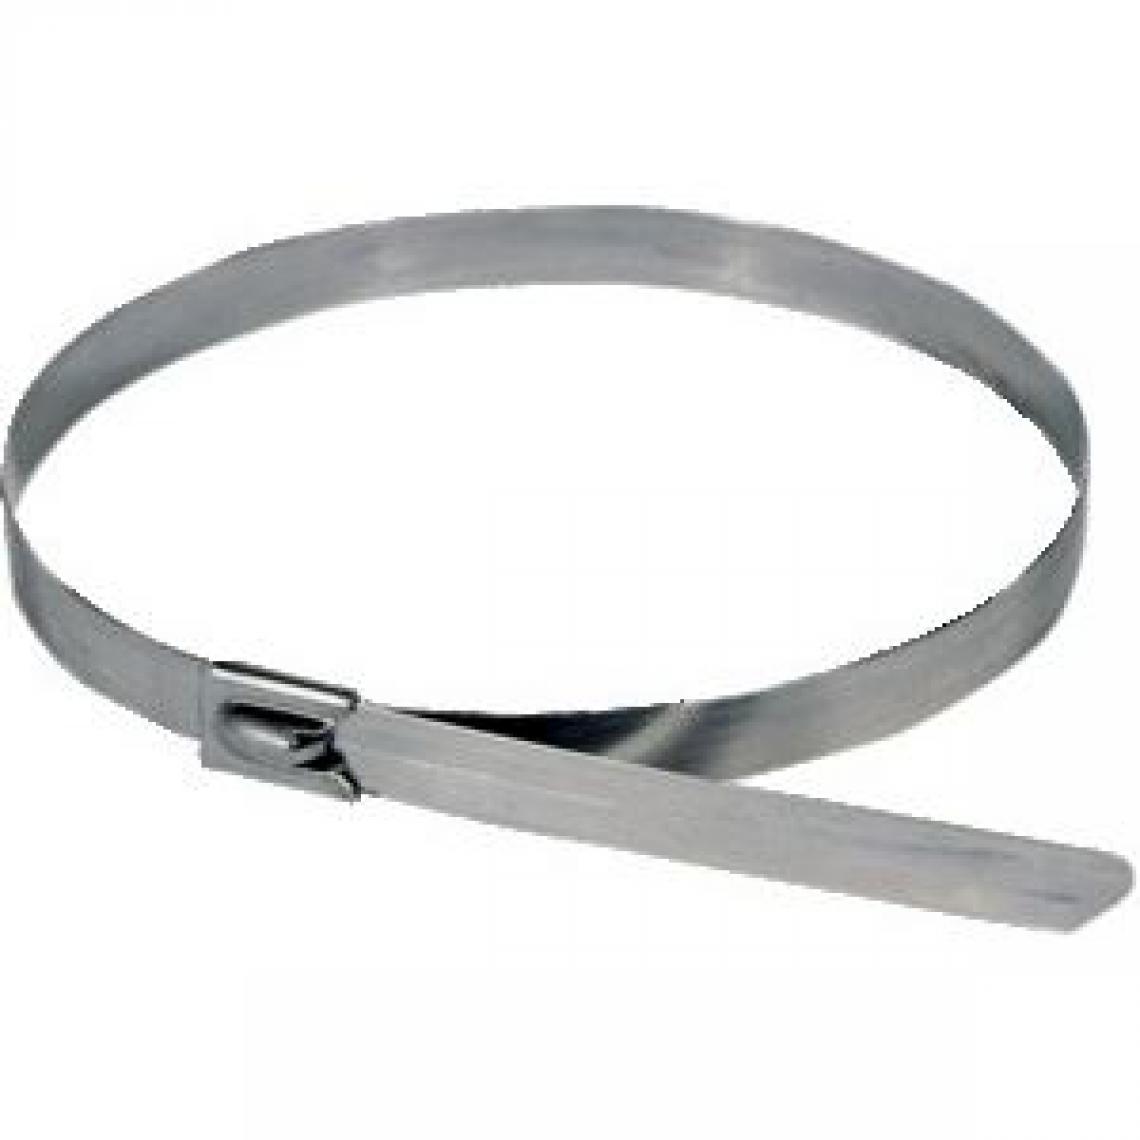 Bizline - collier de cablage - en inox - 350 x 4.6 mm x 100 - bizline 300121 - Accessoires de câblage